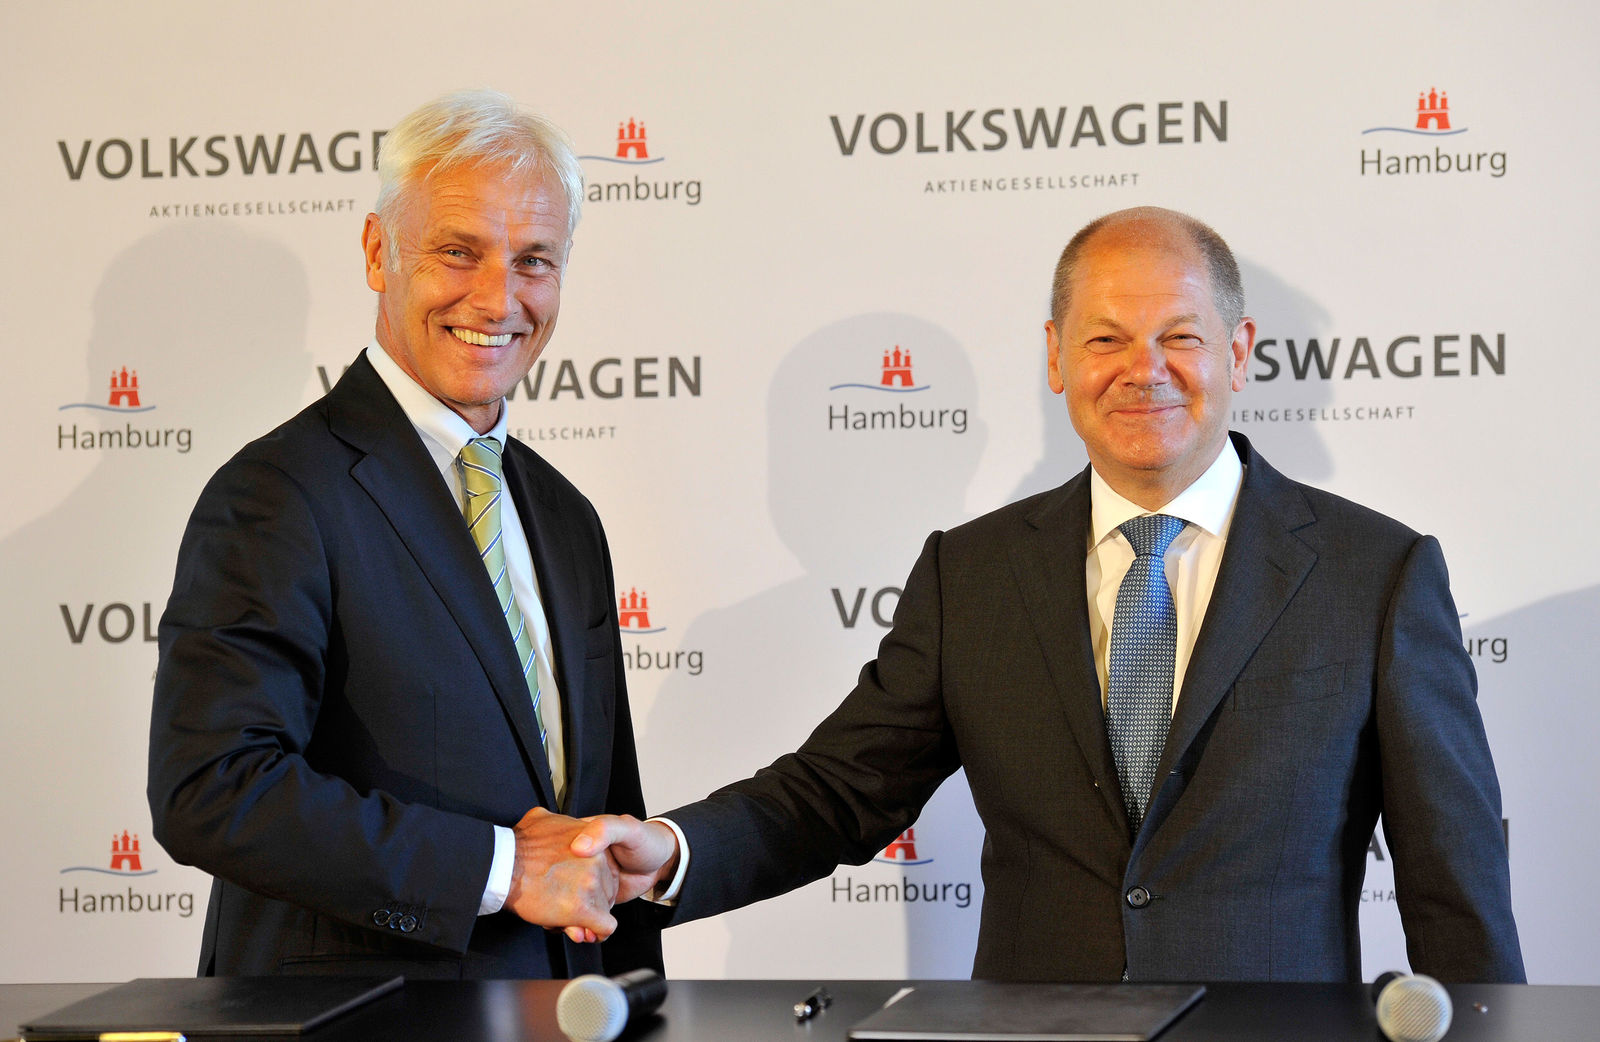 Hamburg and Volkswagen agree strategic mobility partnership